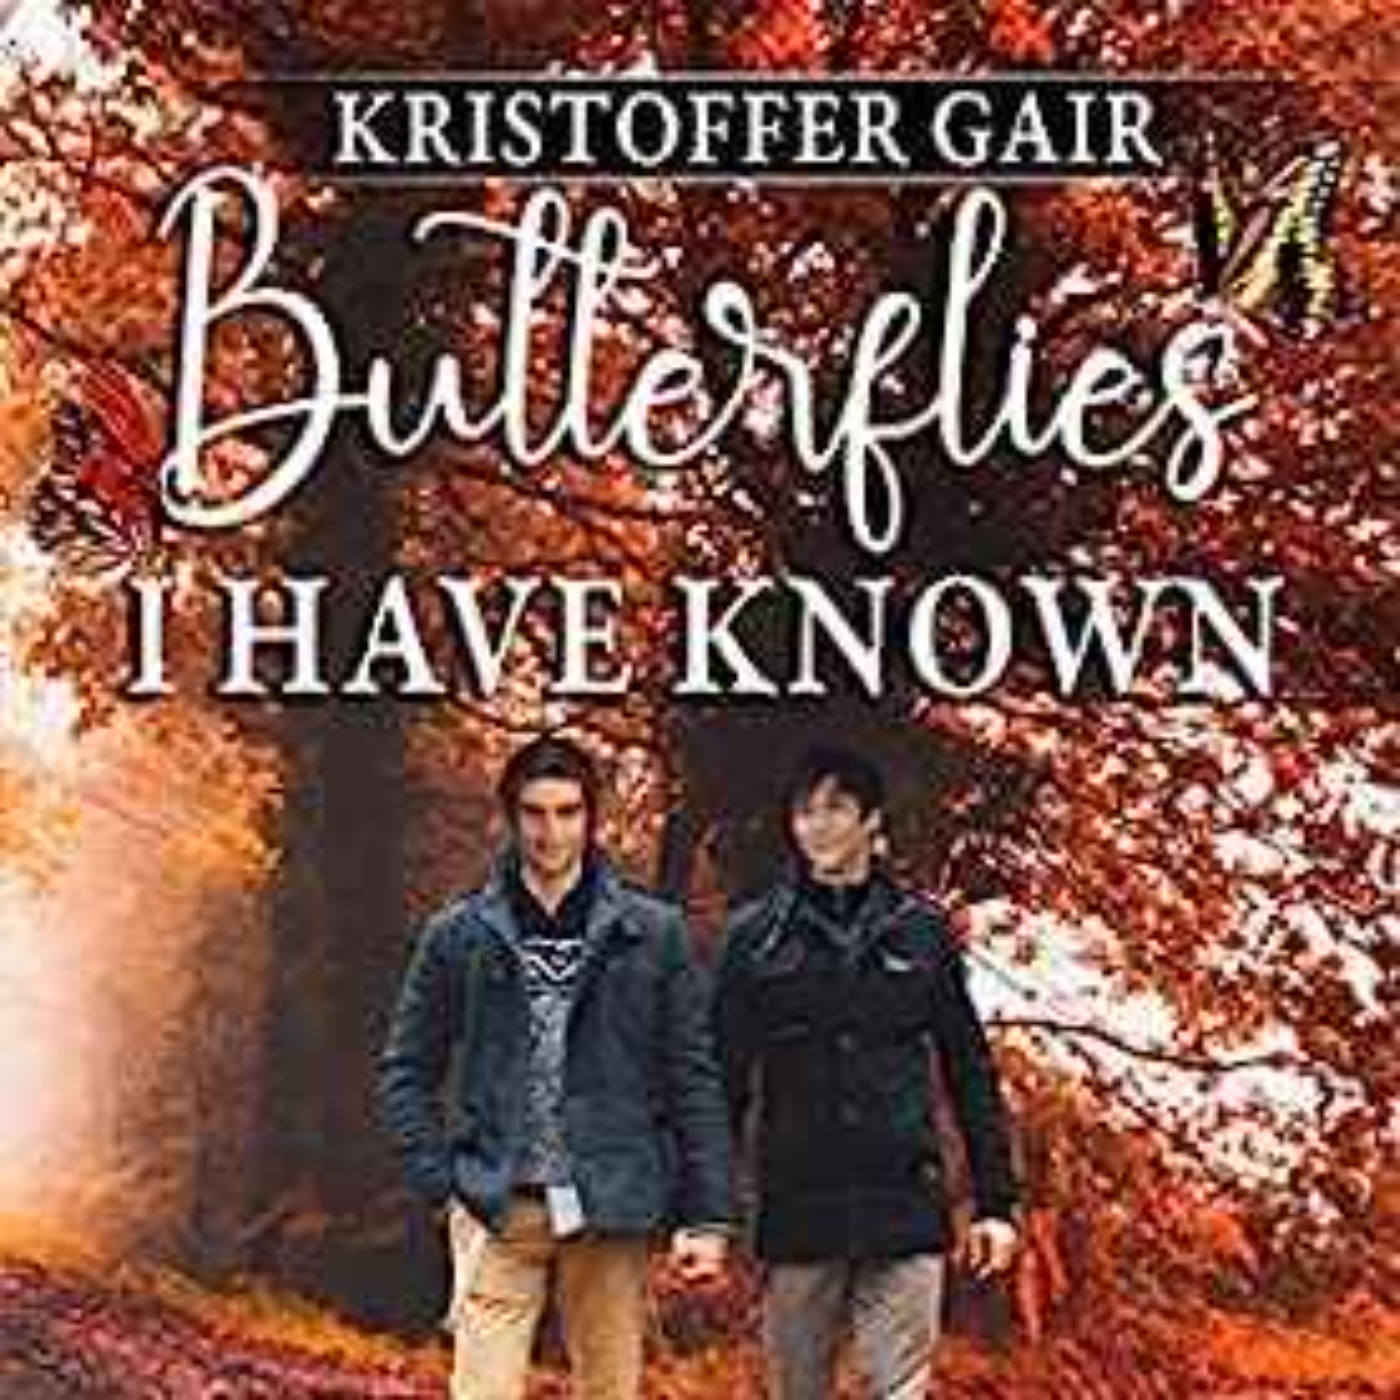 Kristoffer Gair - Butterflies I Have Known